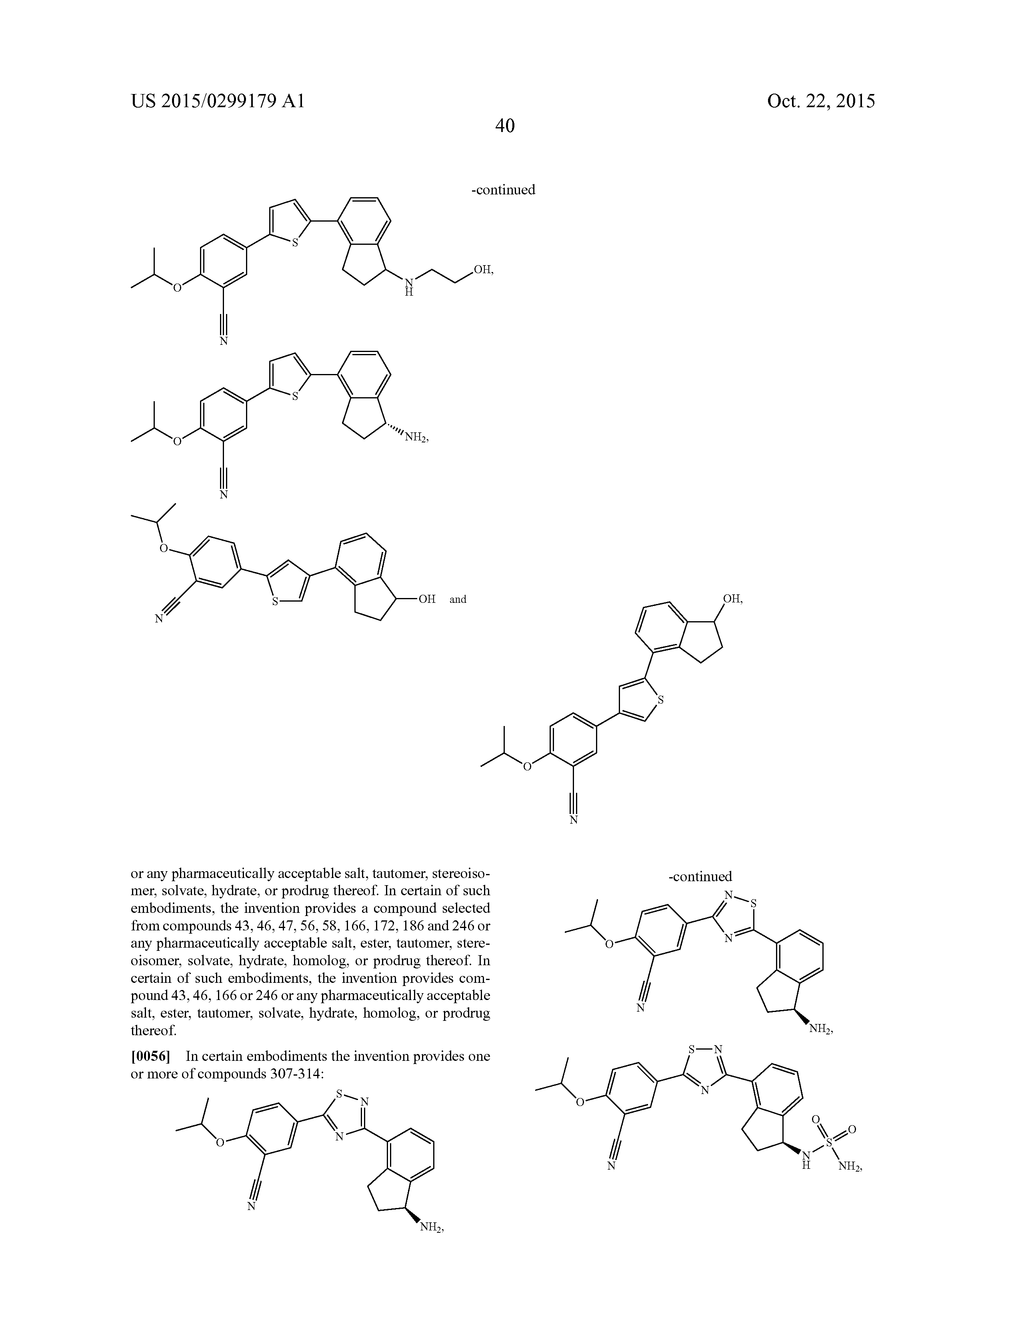 SELECTIVE HETEROCYCLIC SPHINGOSINE 1 PHOSPHATE RECEPTOR MODULATORS - diagram, schematic, and image 41